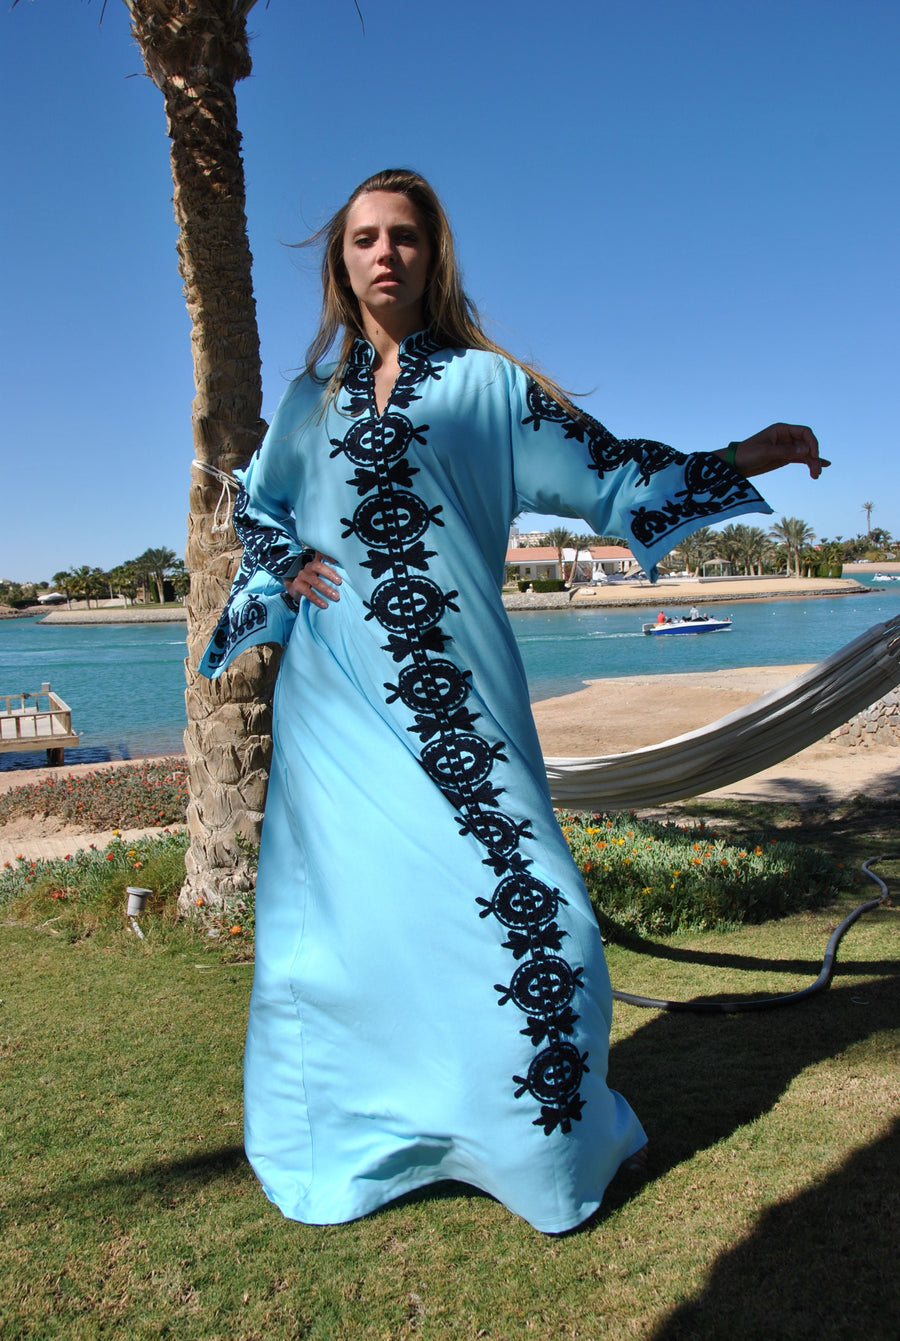 Elegant Turquoise embroidered kaftan dress, Cotton caftan dress, Long sleeve caftan, Chic embroidered caftan, High quality Egyptian cotton